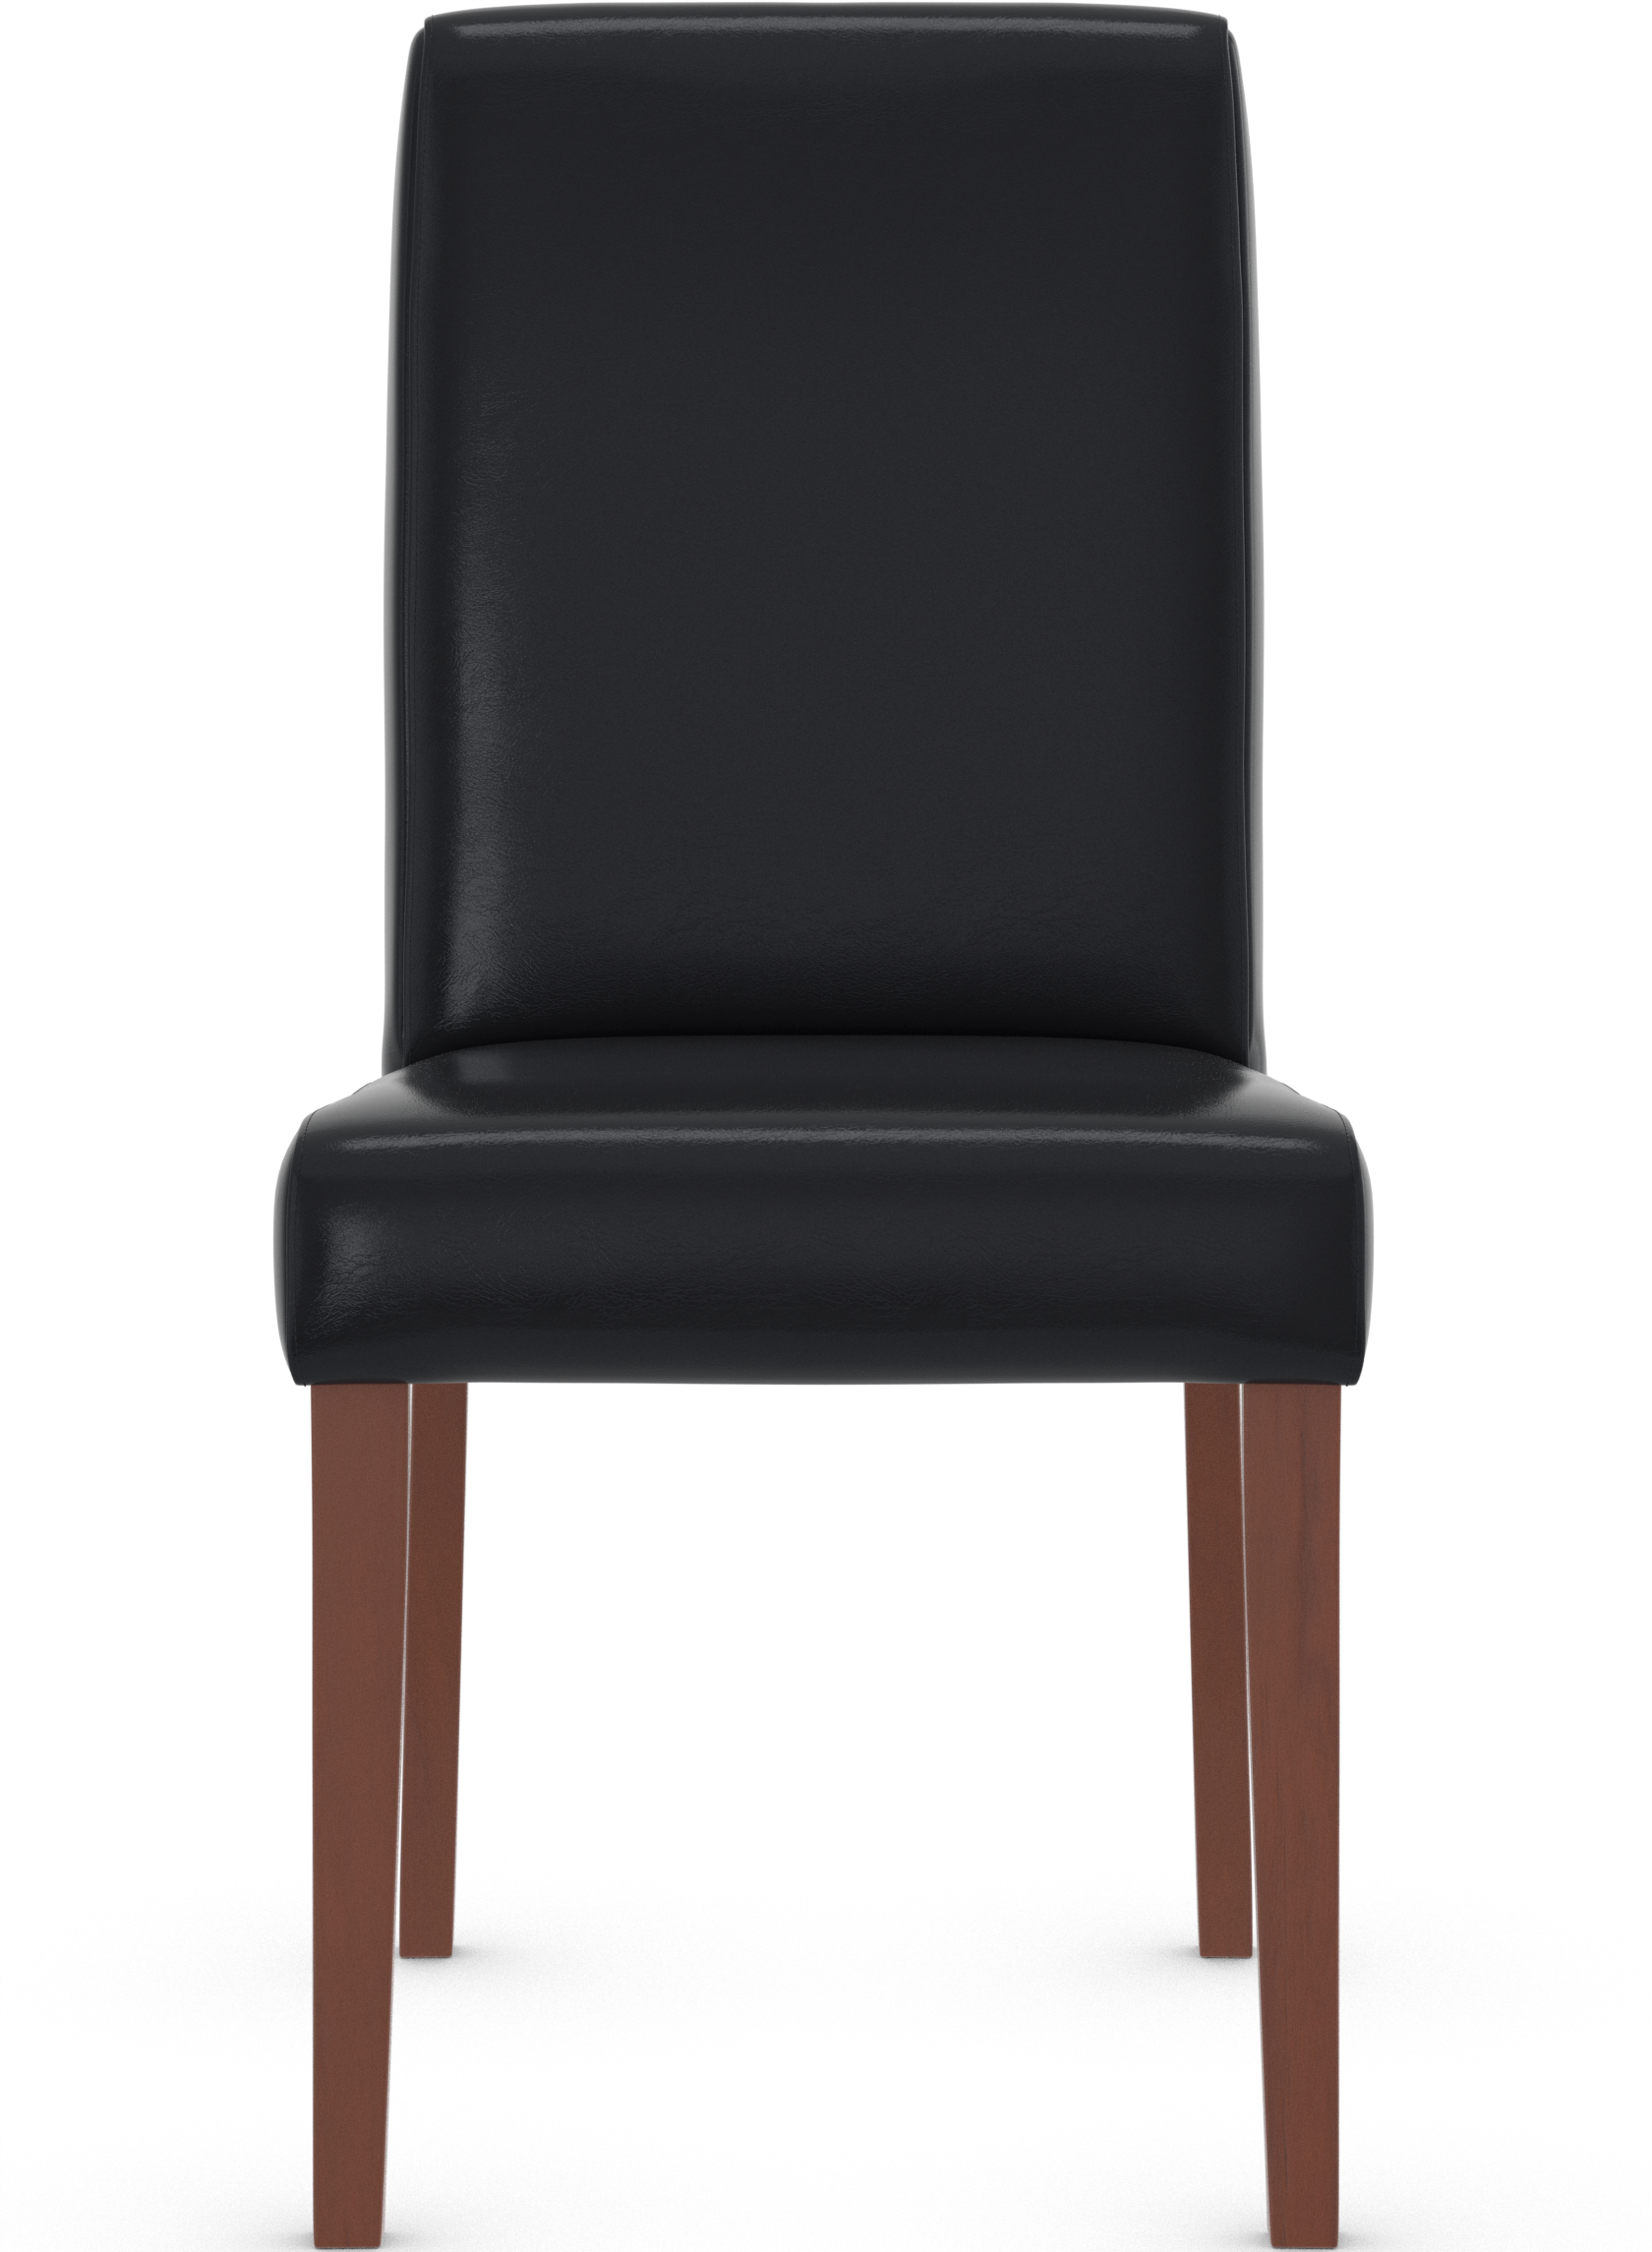 Firenze Light Oak Dining Chair Bonded Leather